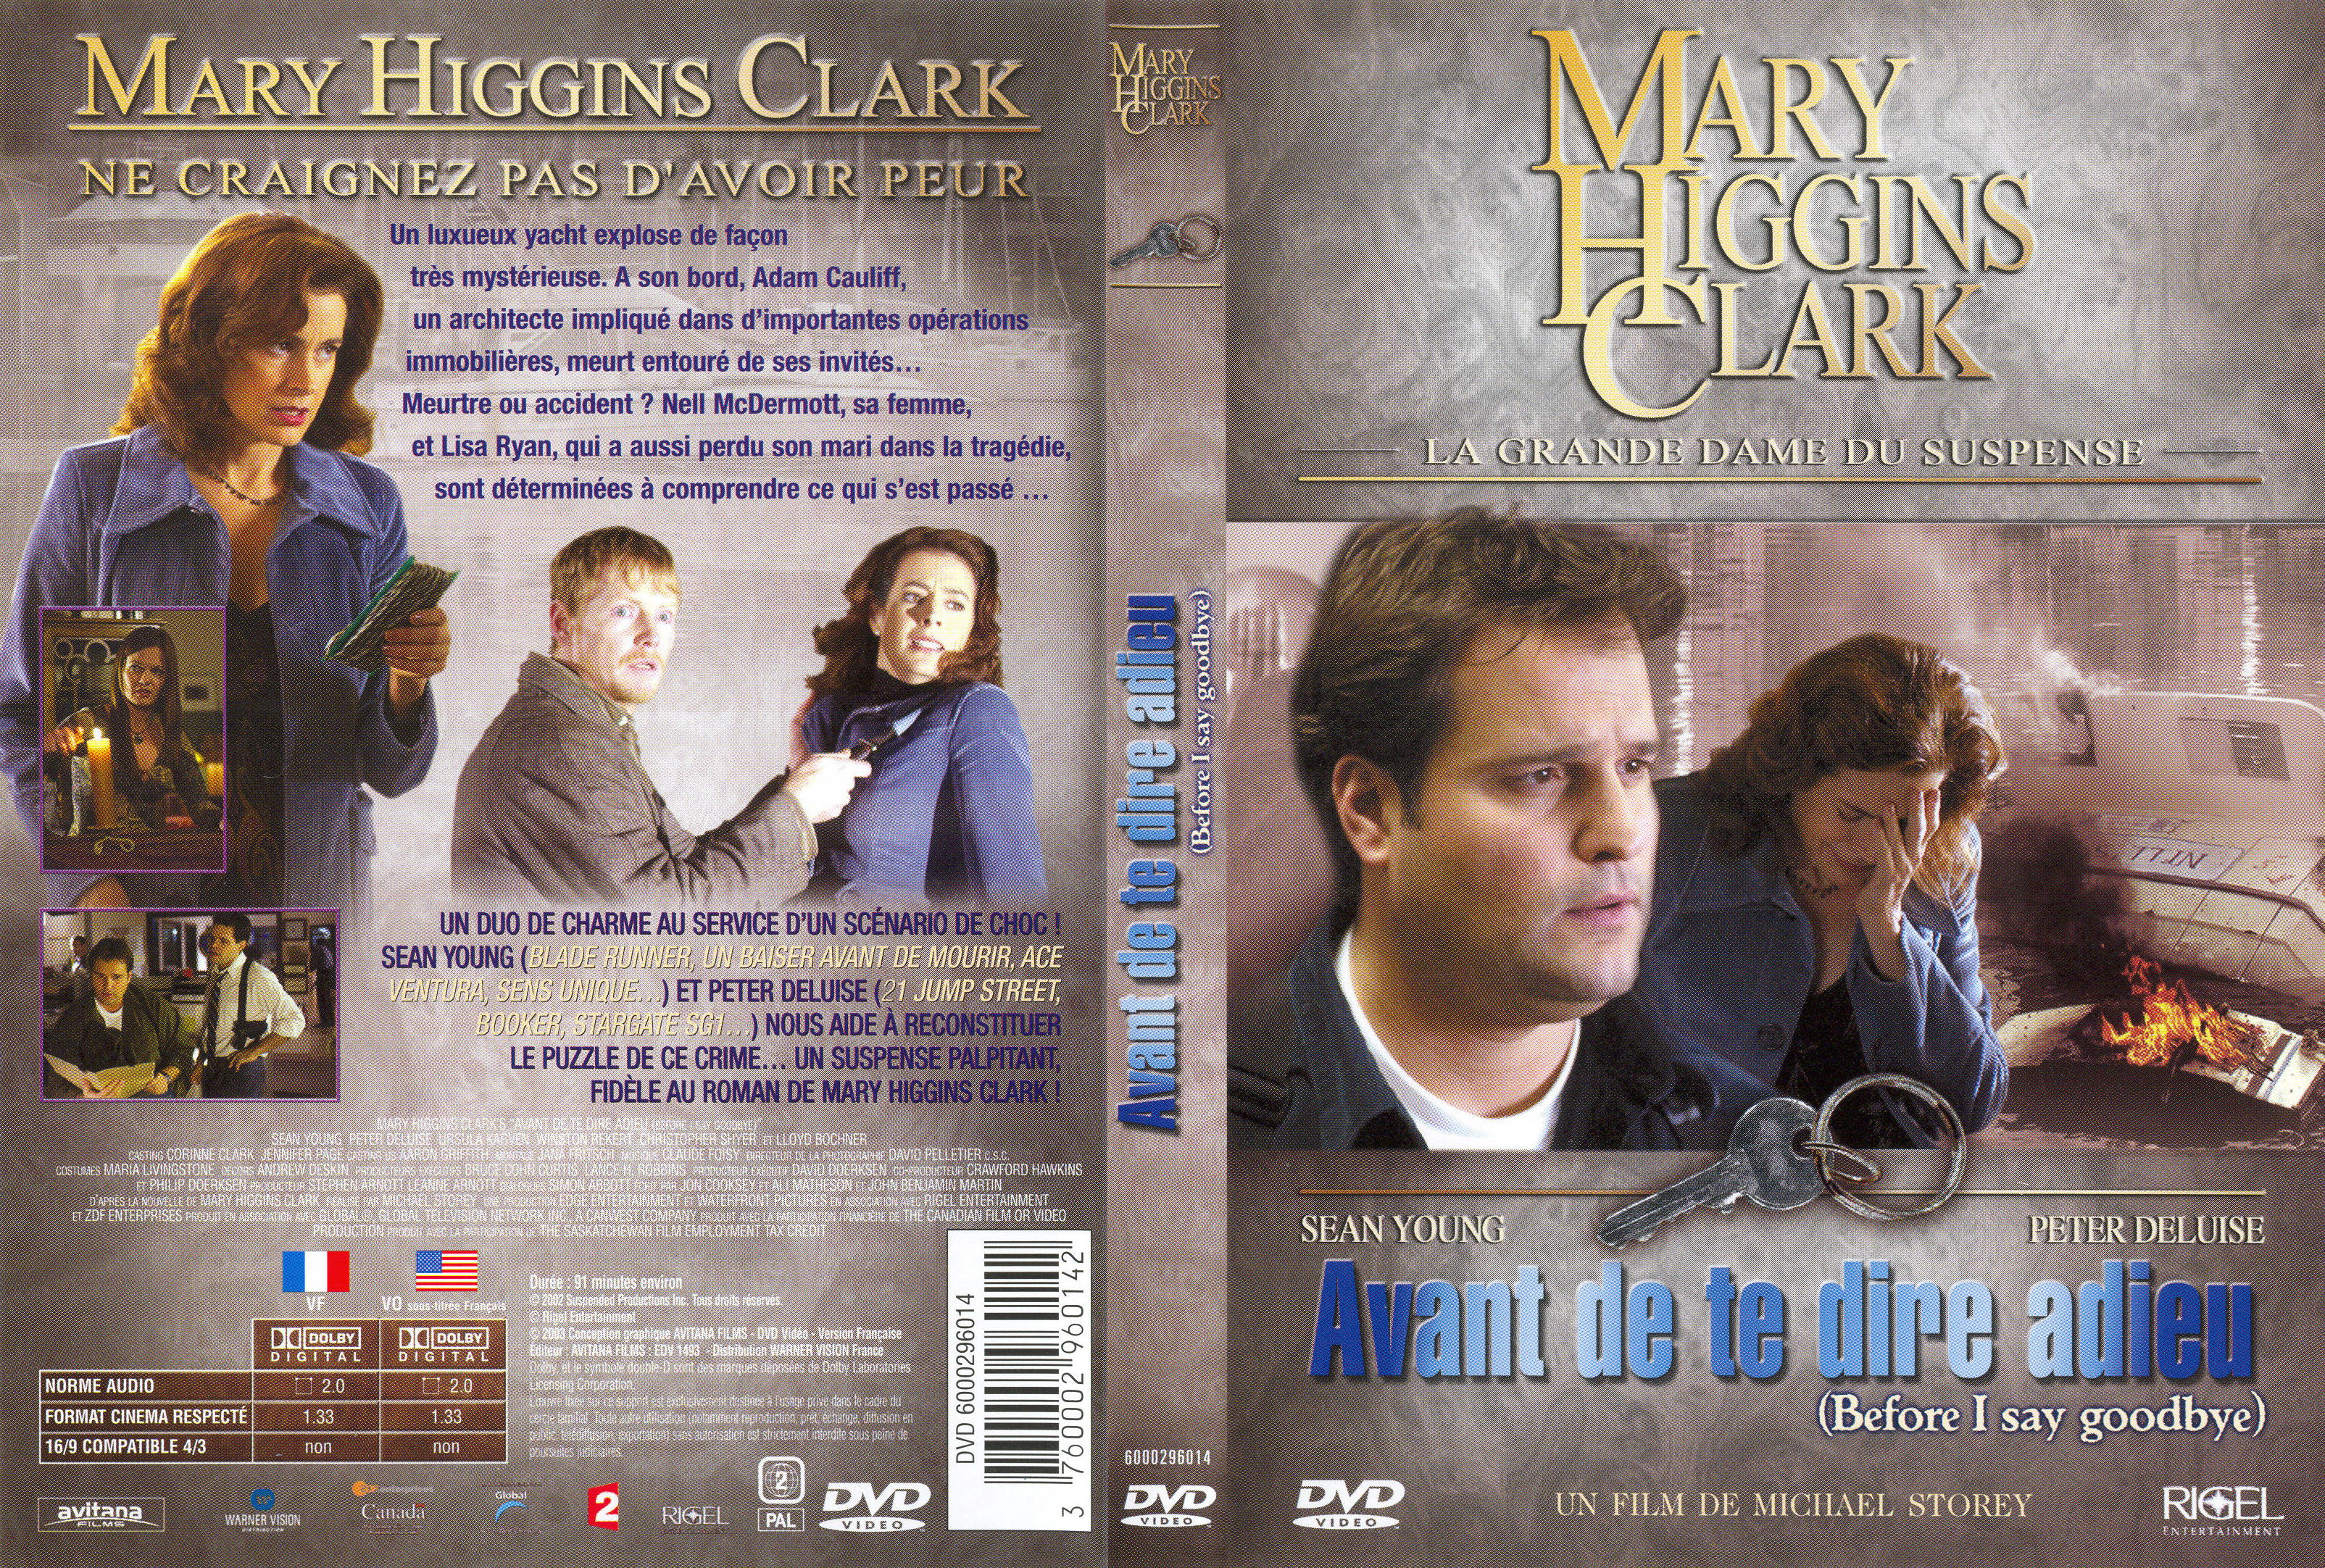 Jaquette DVD de Mary Higgins Clark - Avant de te dire adieu v2 - Cinéma Passion3208 x 2164